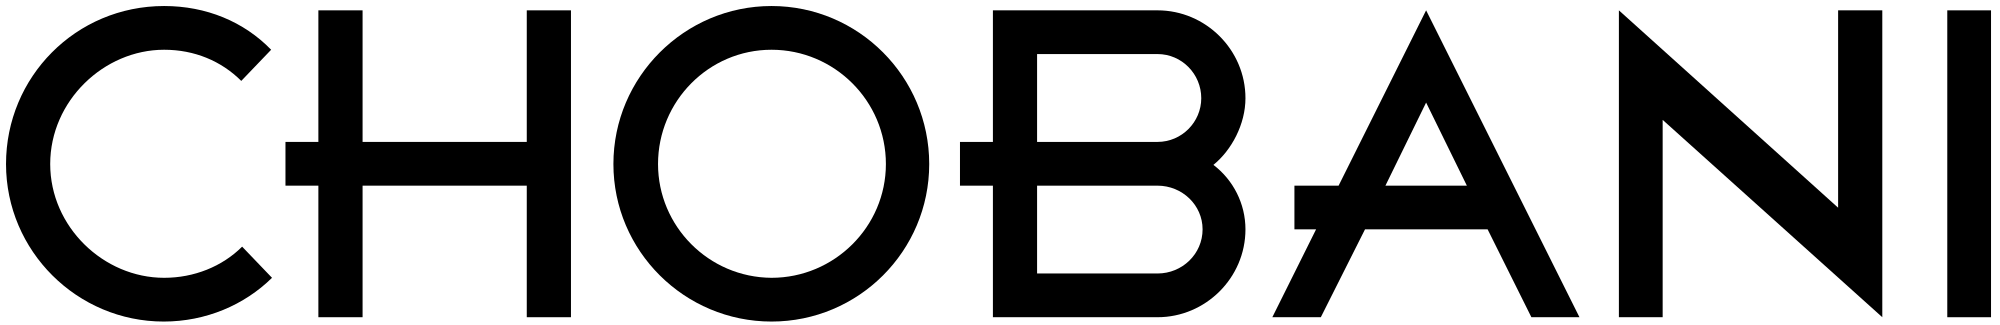 2000px-Chobani_logo.svg.png